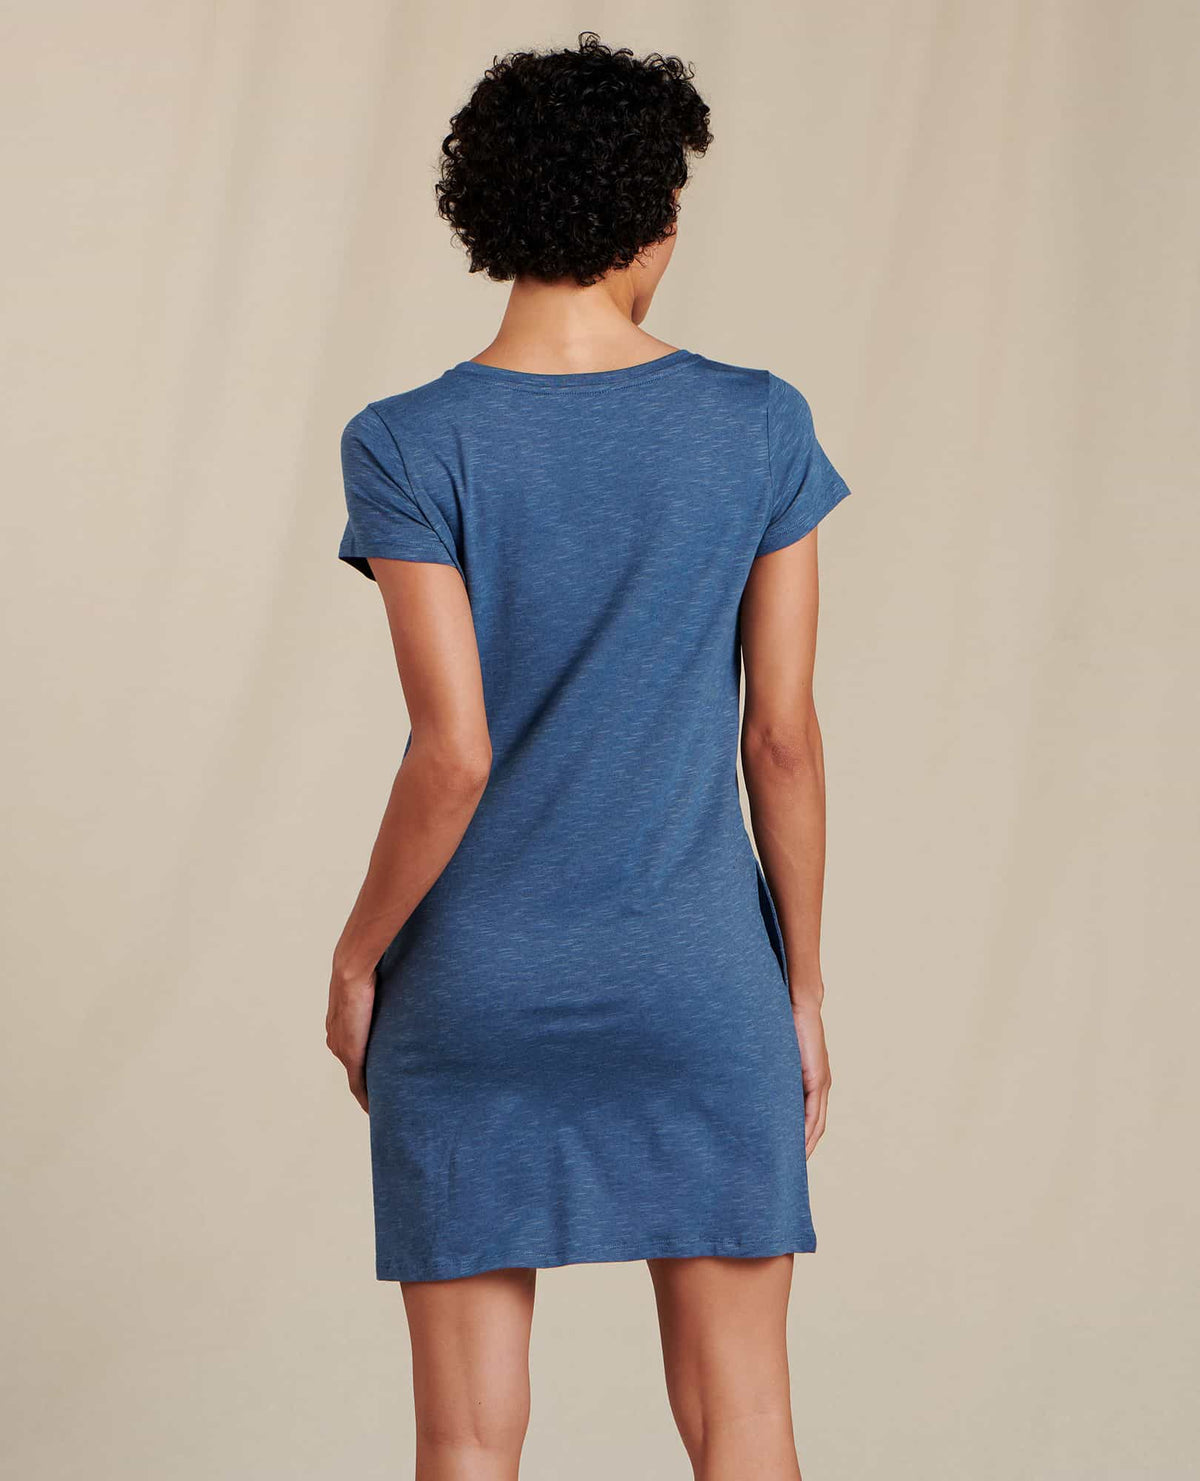 Windmere II Short Sleeve Dress - SALE